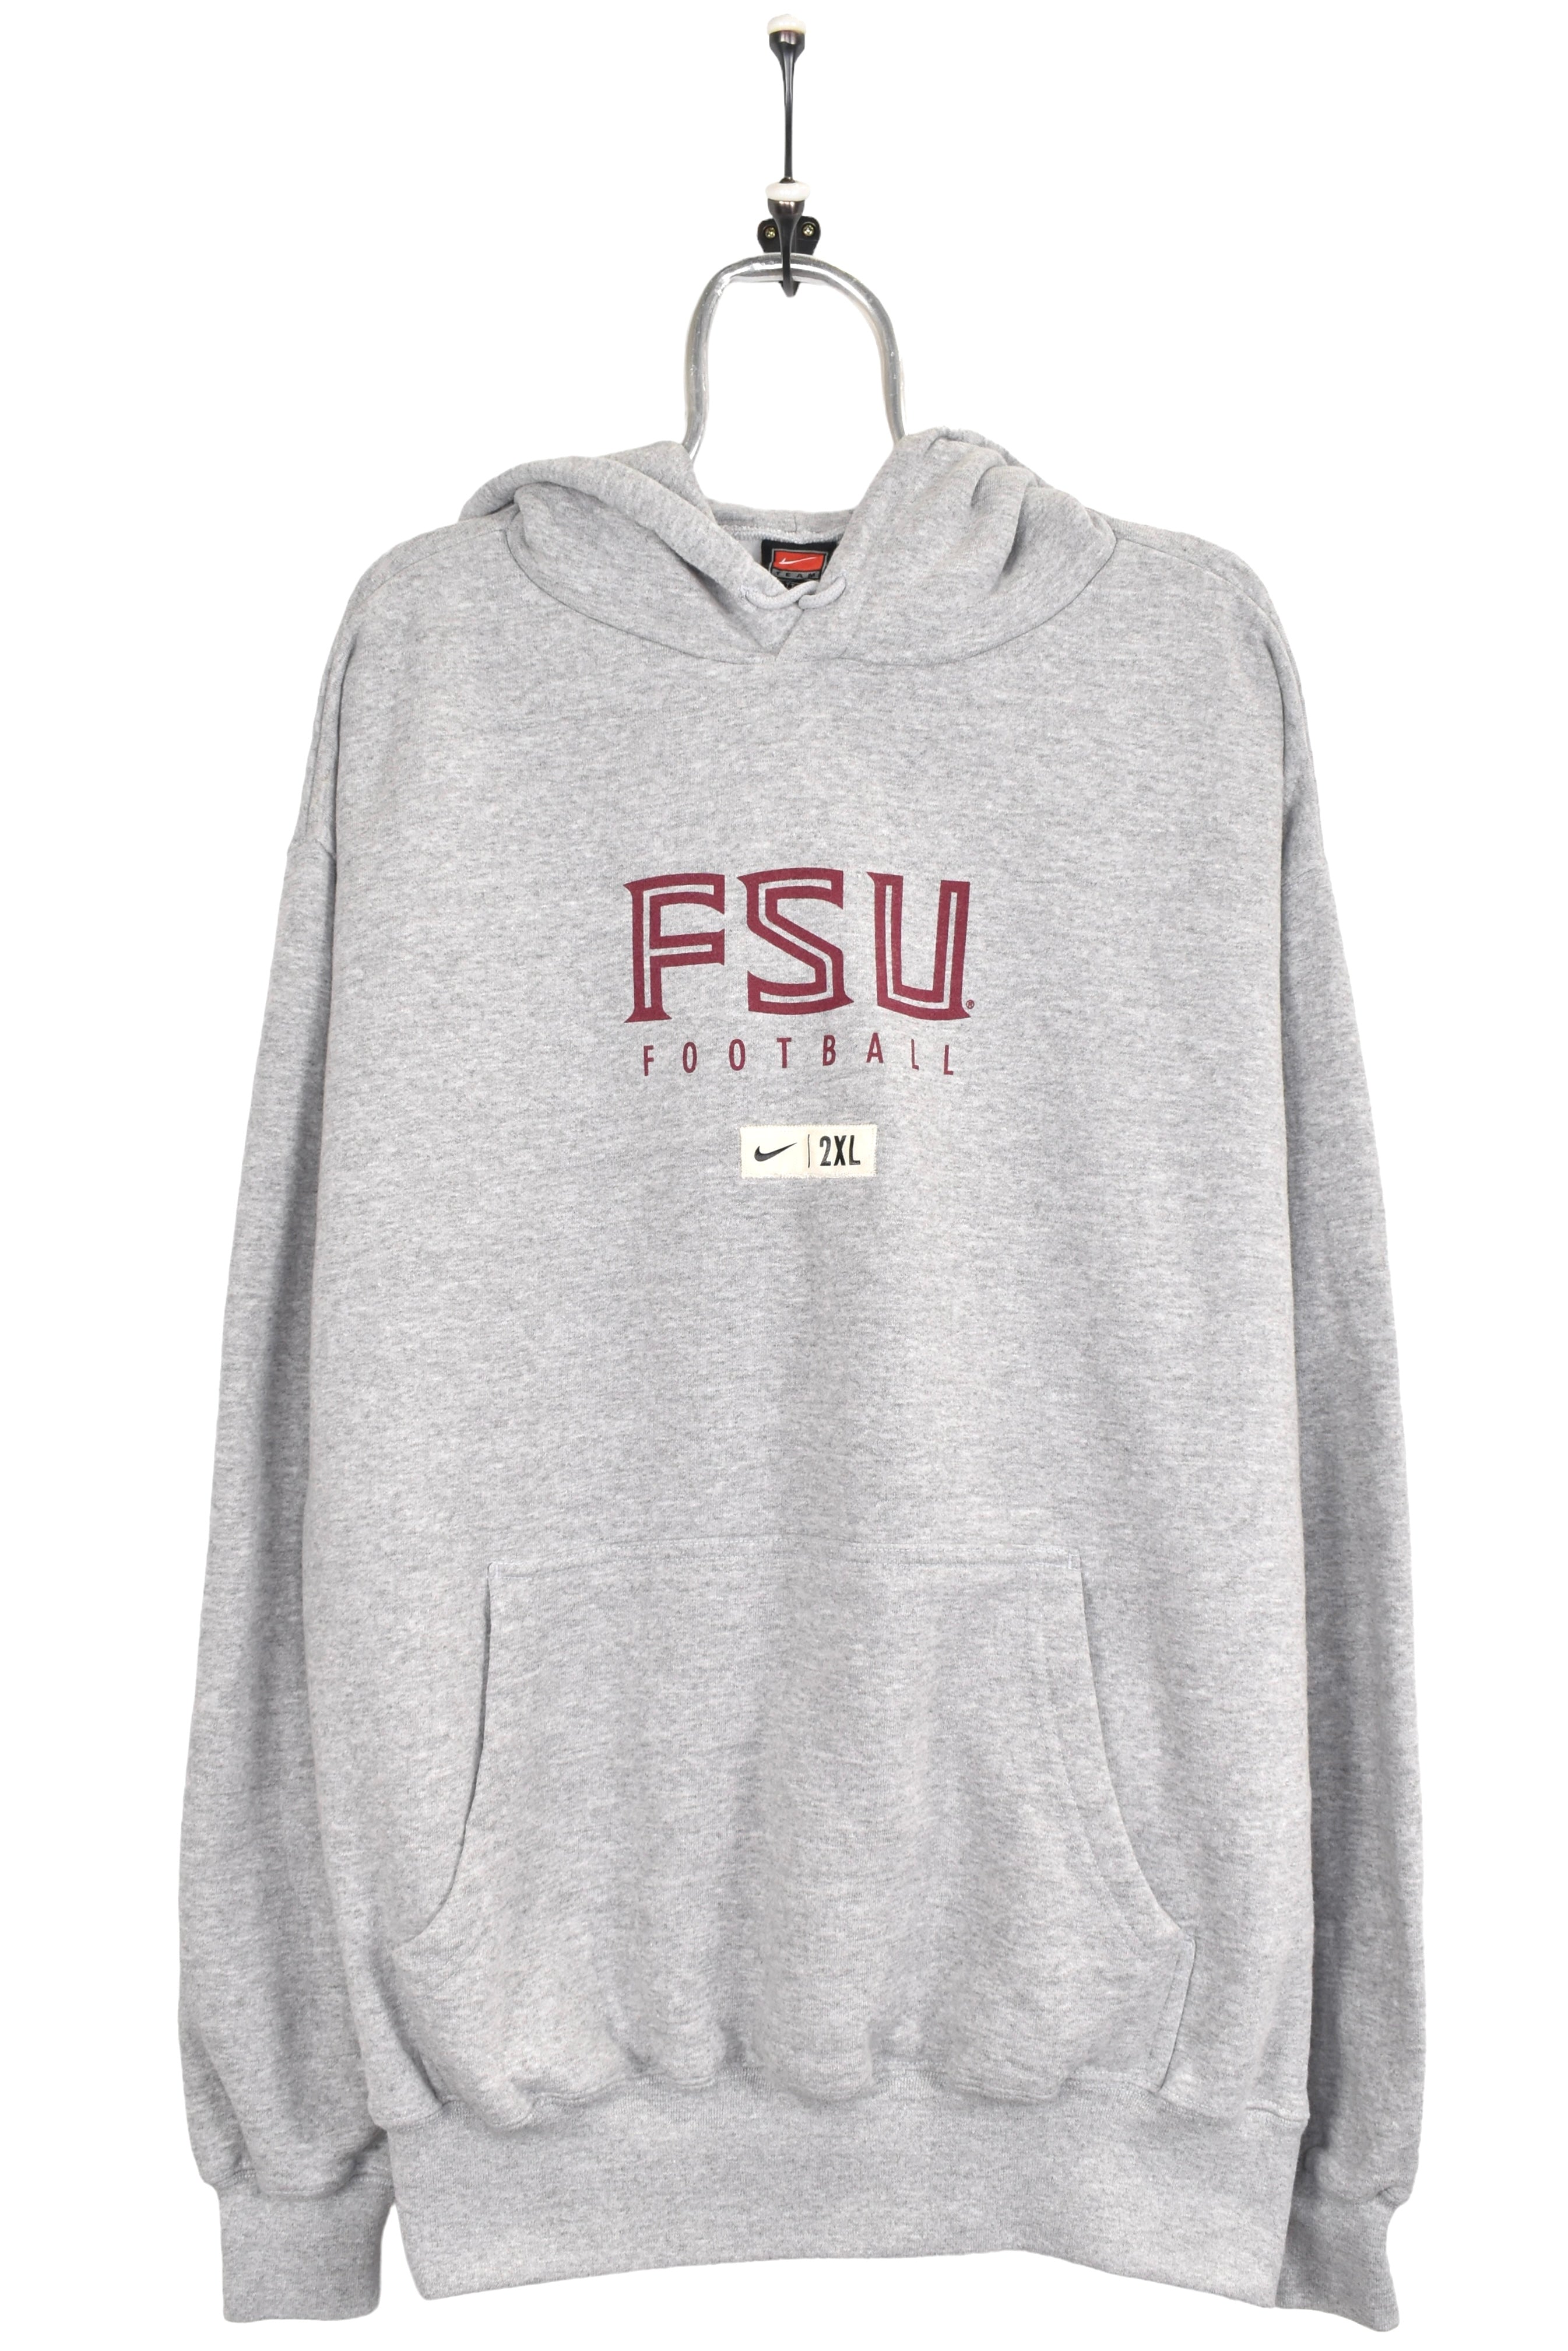 Vintage Florida State hoodie, grey football graphic sweatshirt - AU XXL COLLEGE